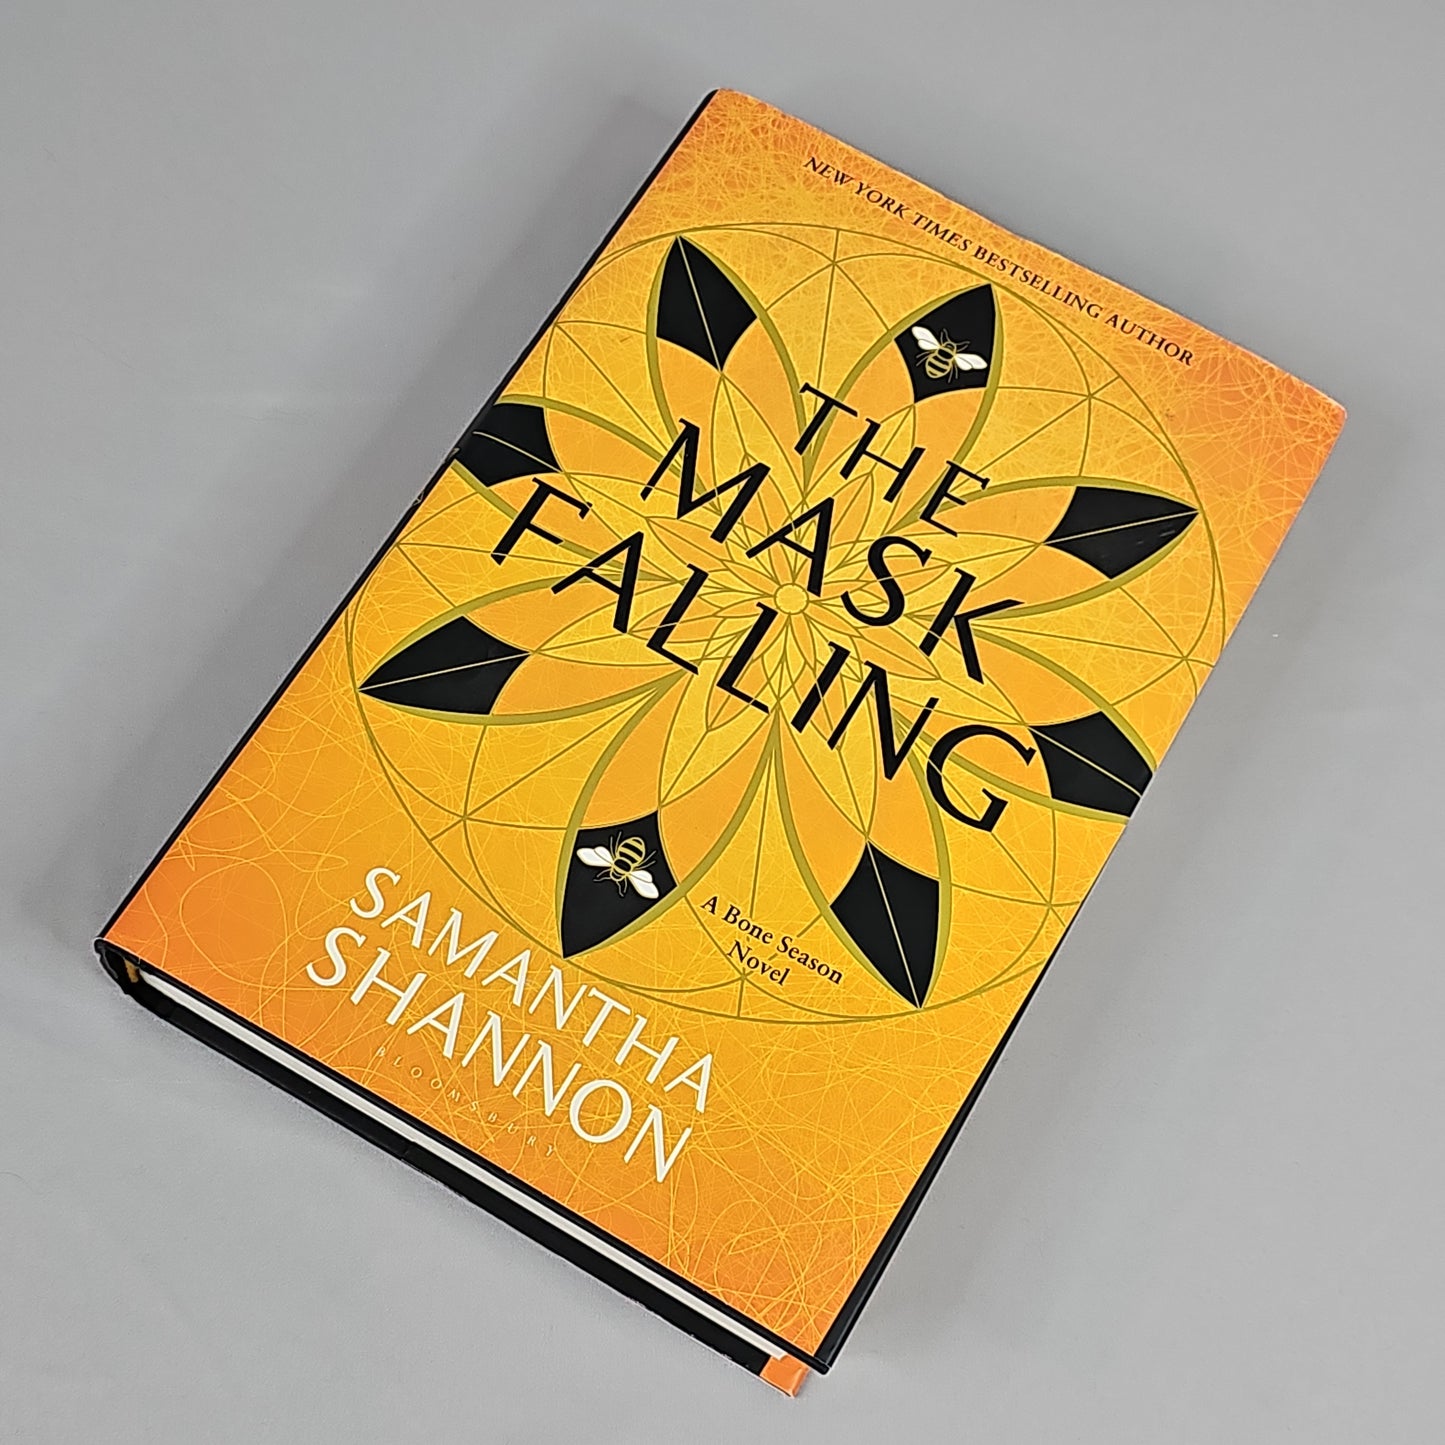 THE MASK FALLING by Samantha Shannon Book Hardback (New)